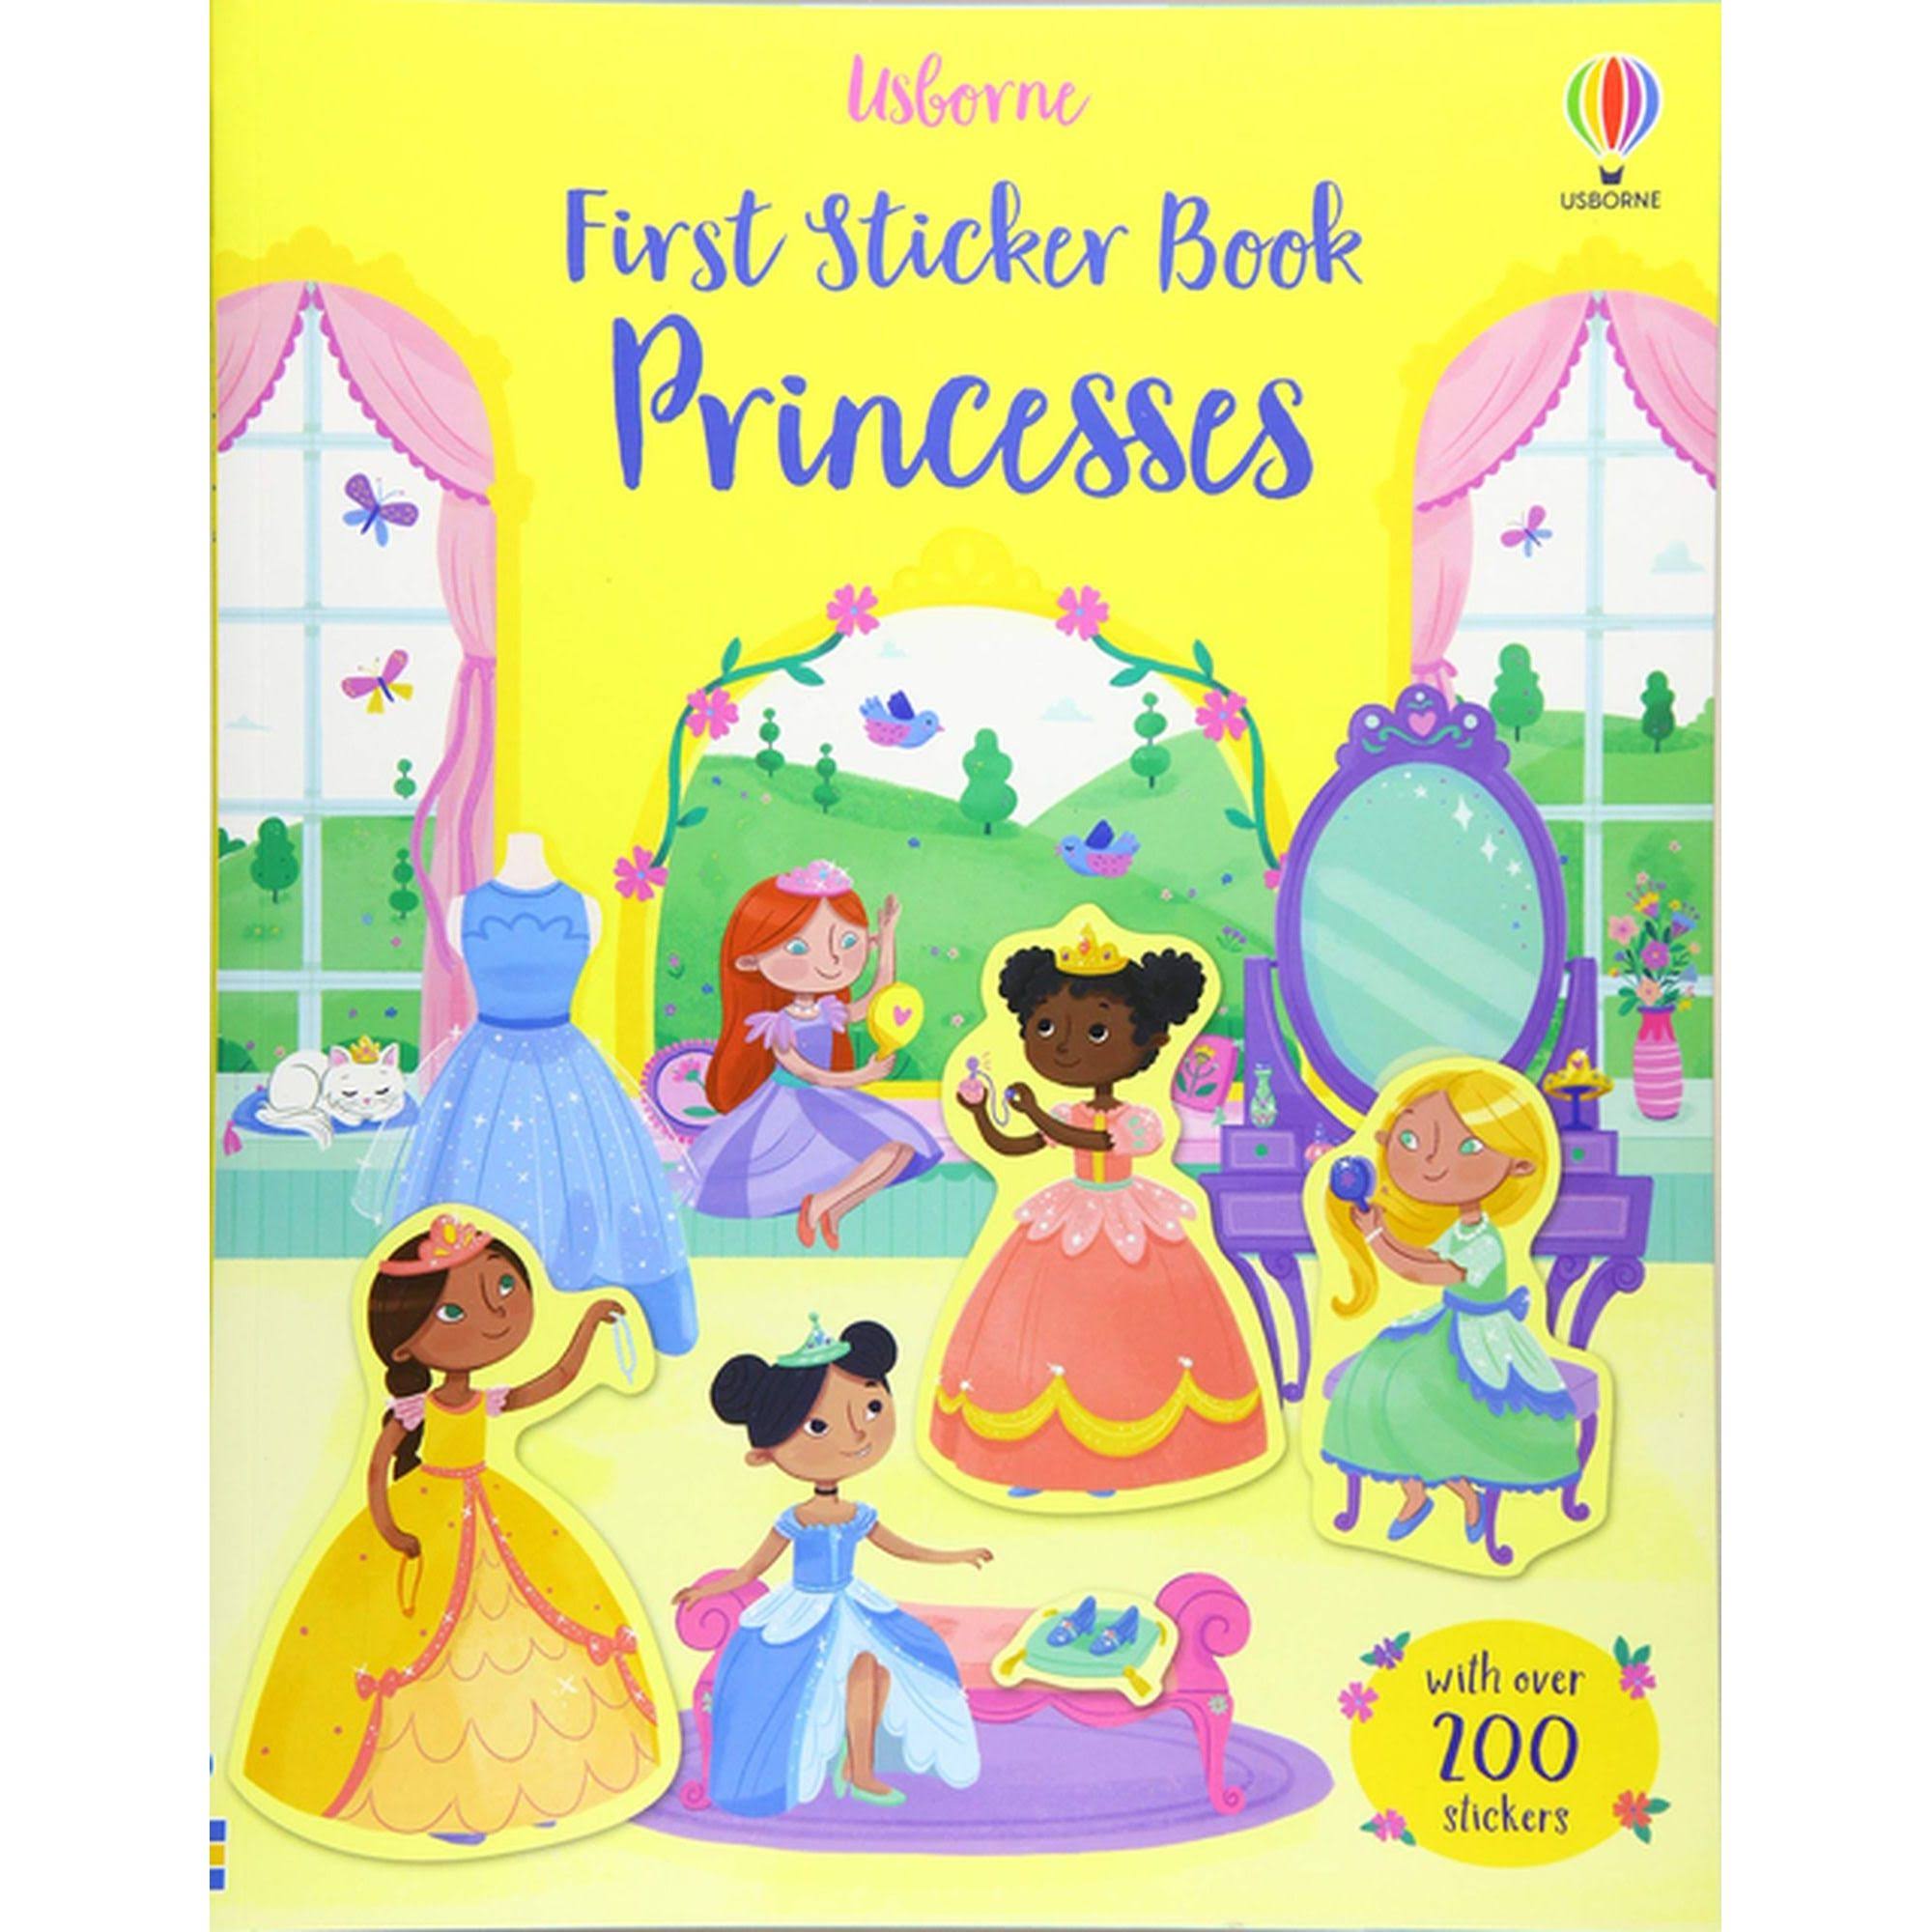 First Sticker Book Princesses